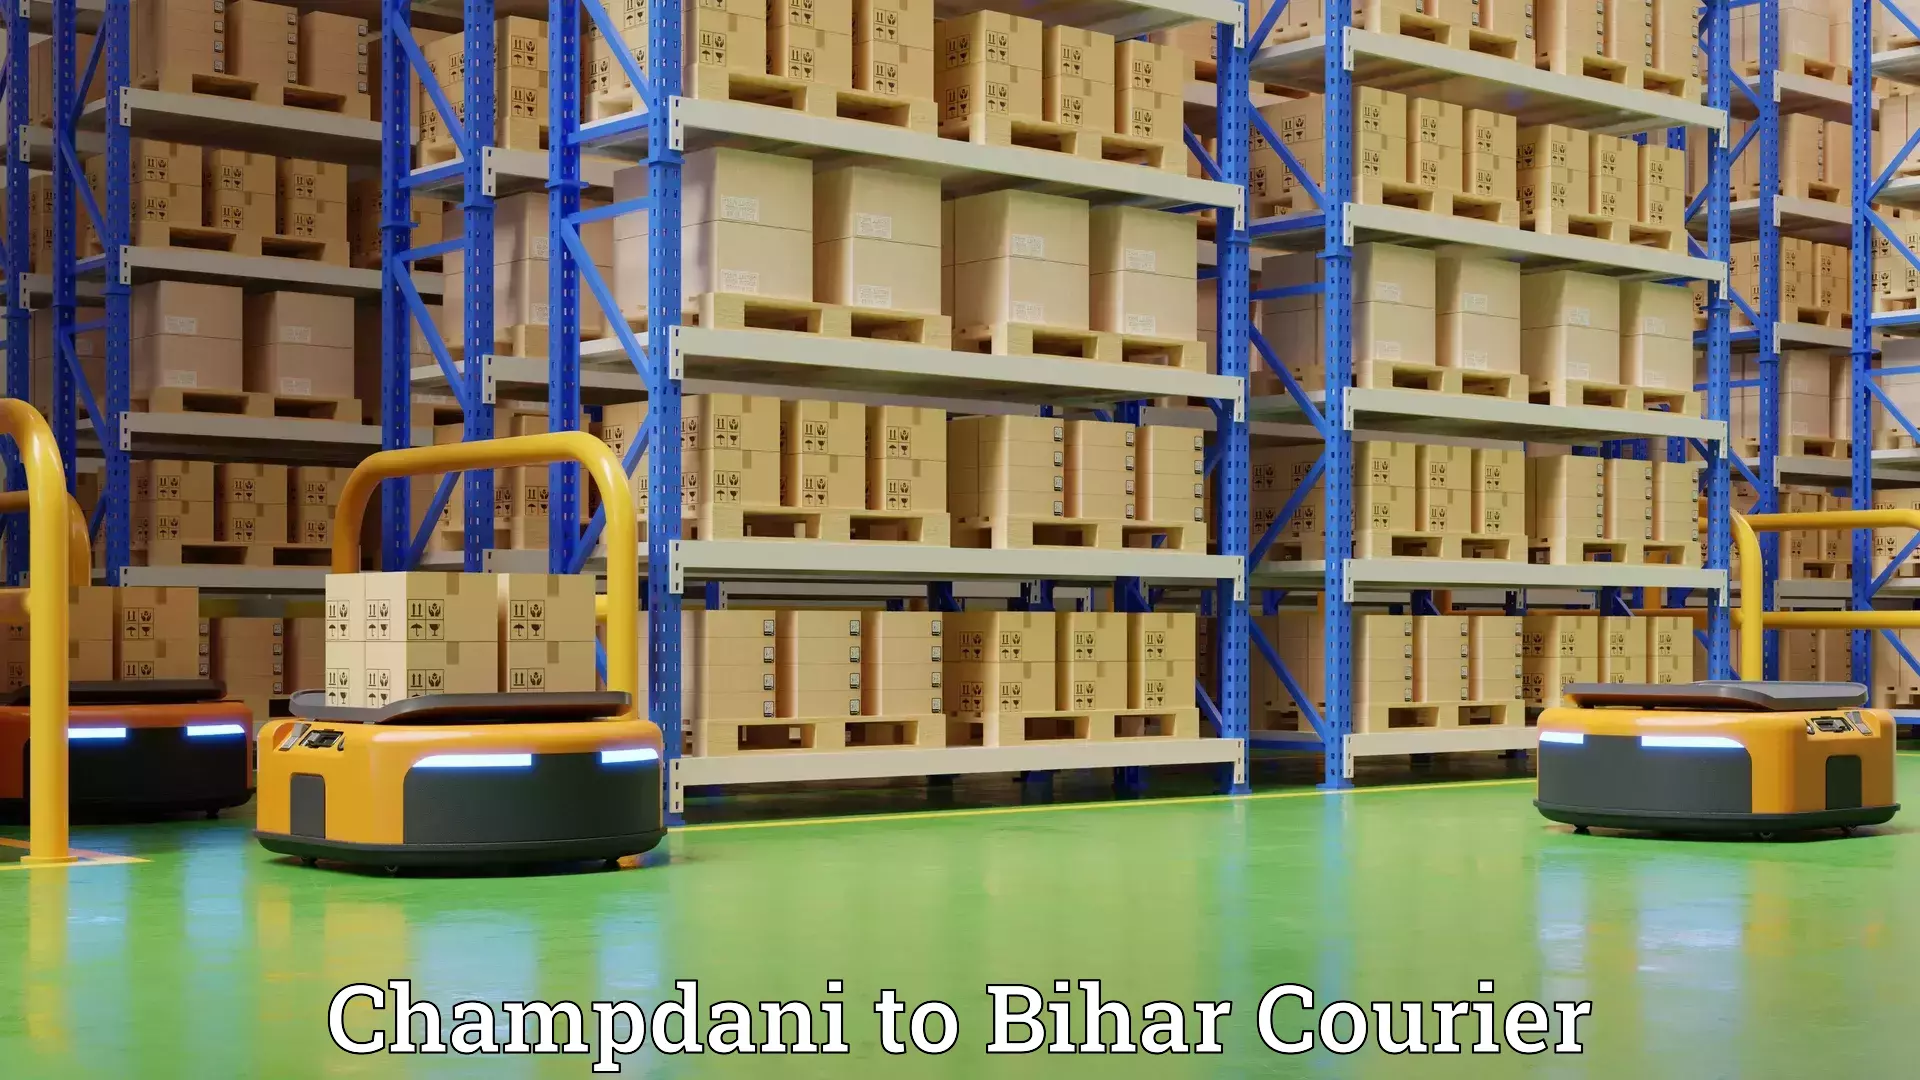 Furniture moving experts Champdani to Bihar